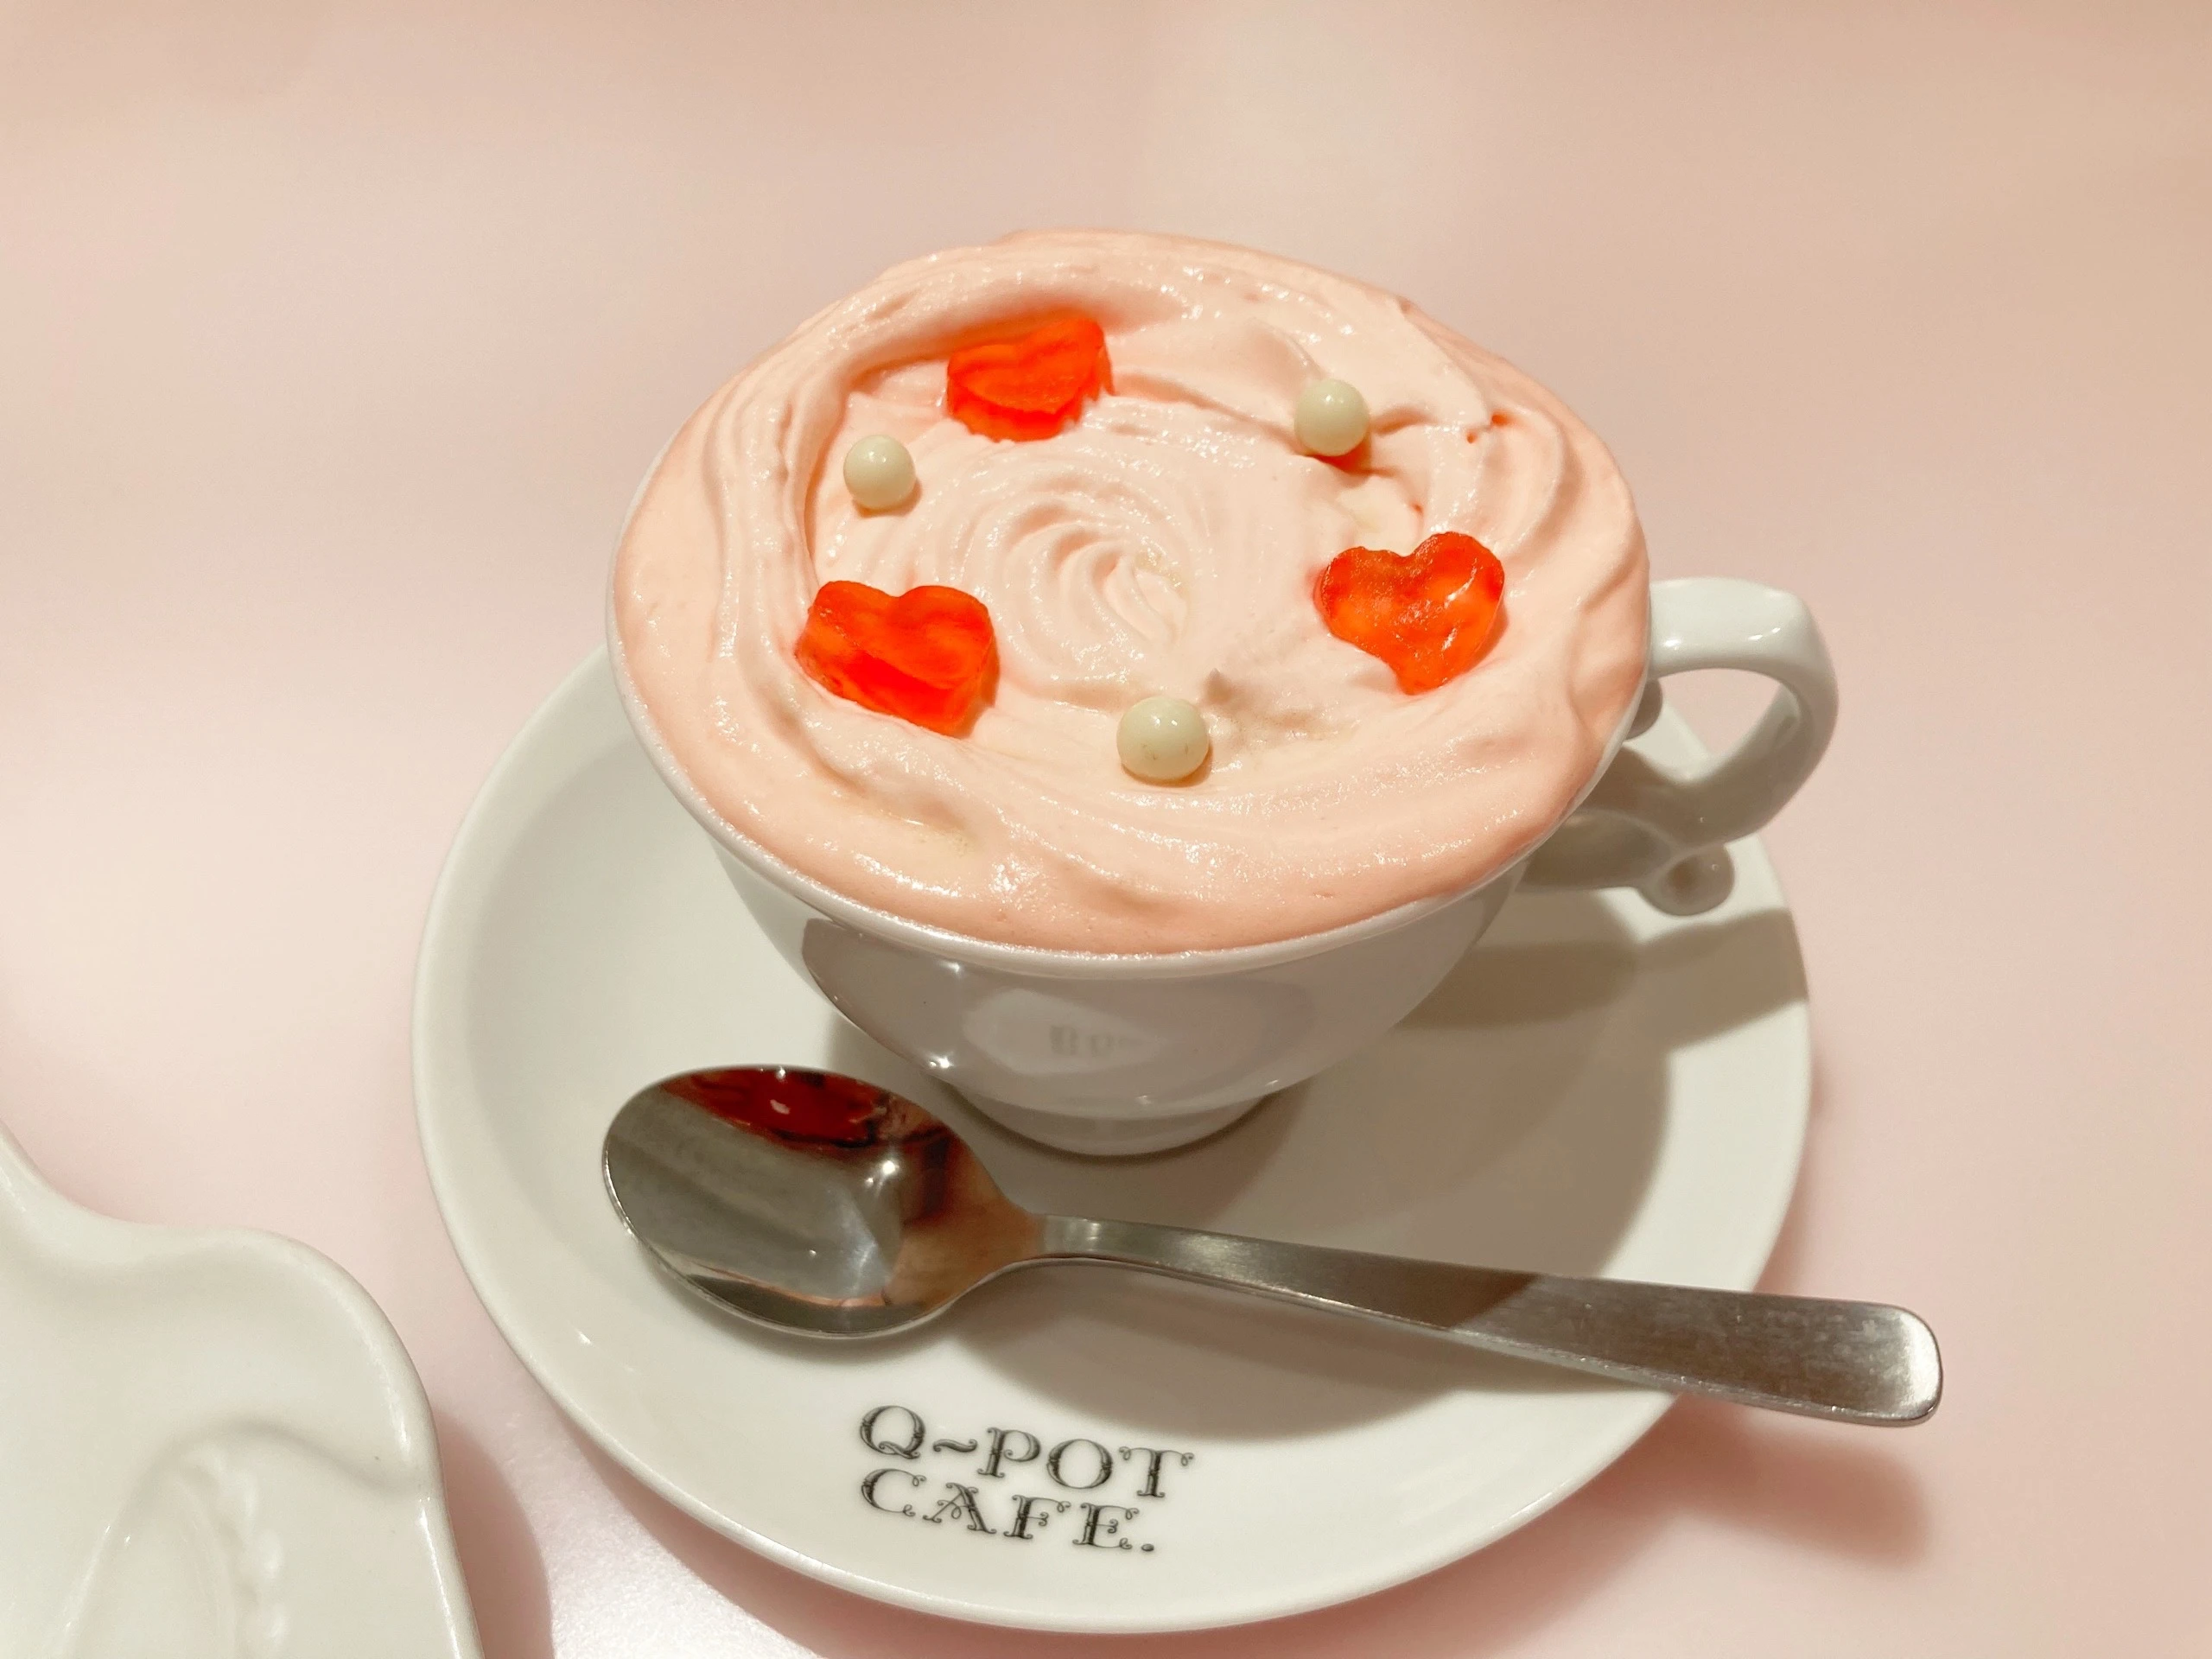 Q-pot CAFE.「Lovely Heart ストロベリーティーホワイトモカ」